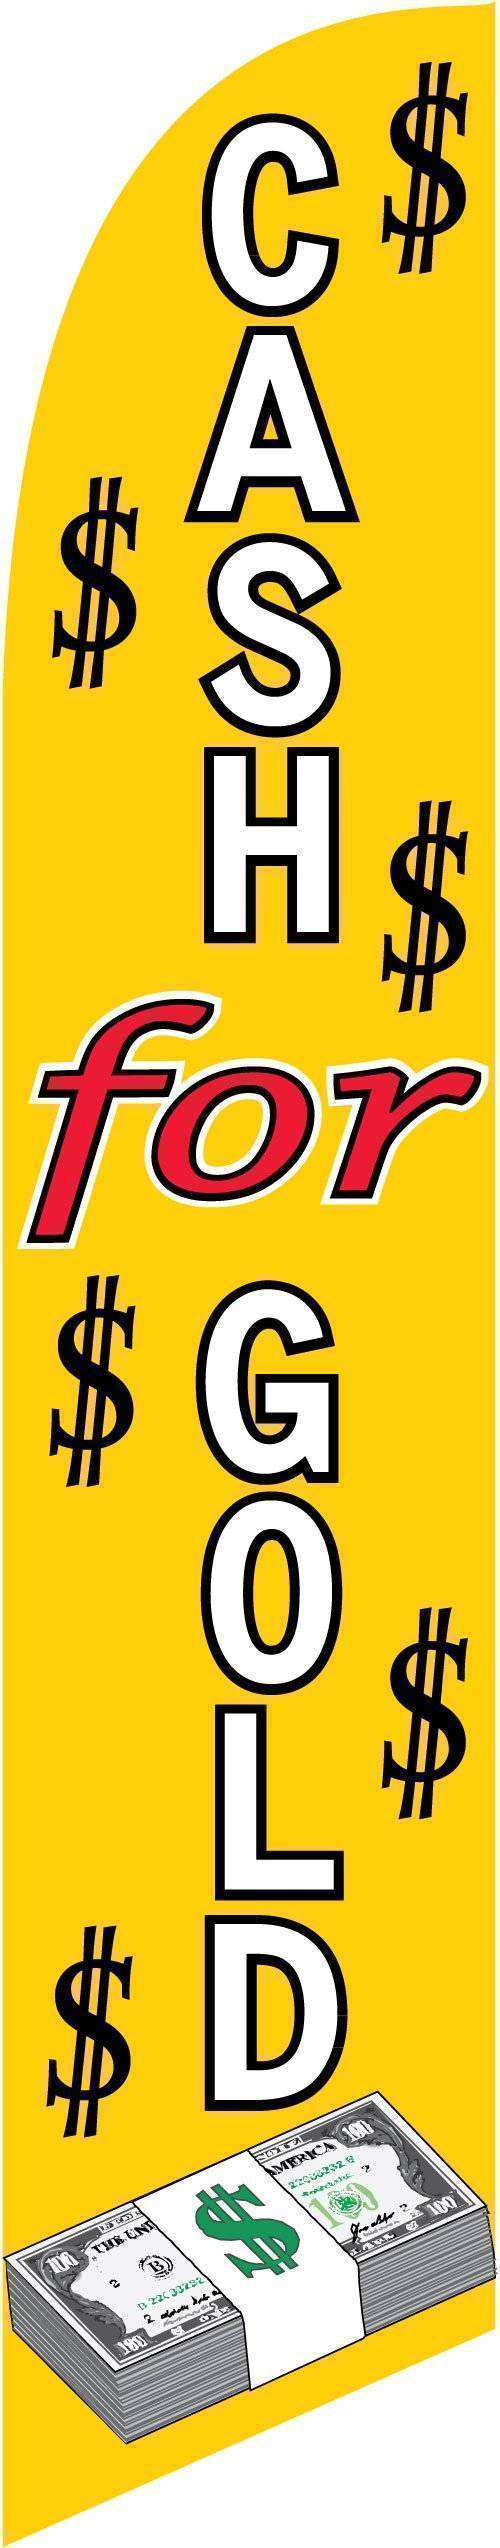 Cash For Gold Advertising Banner (Complete set).